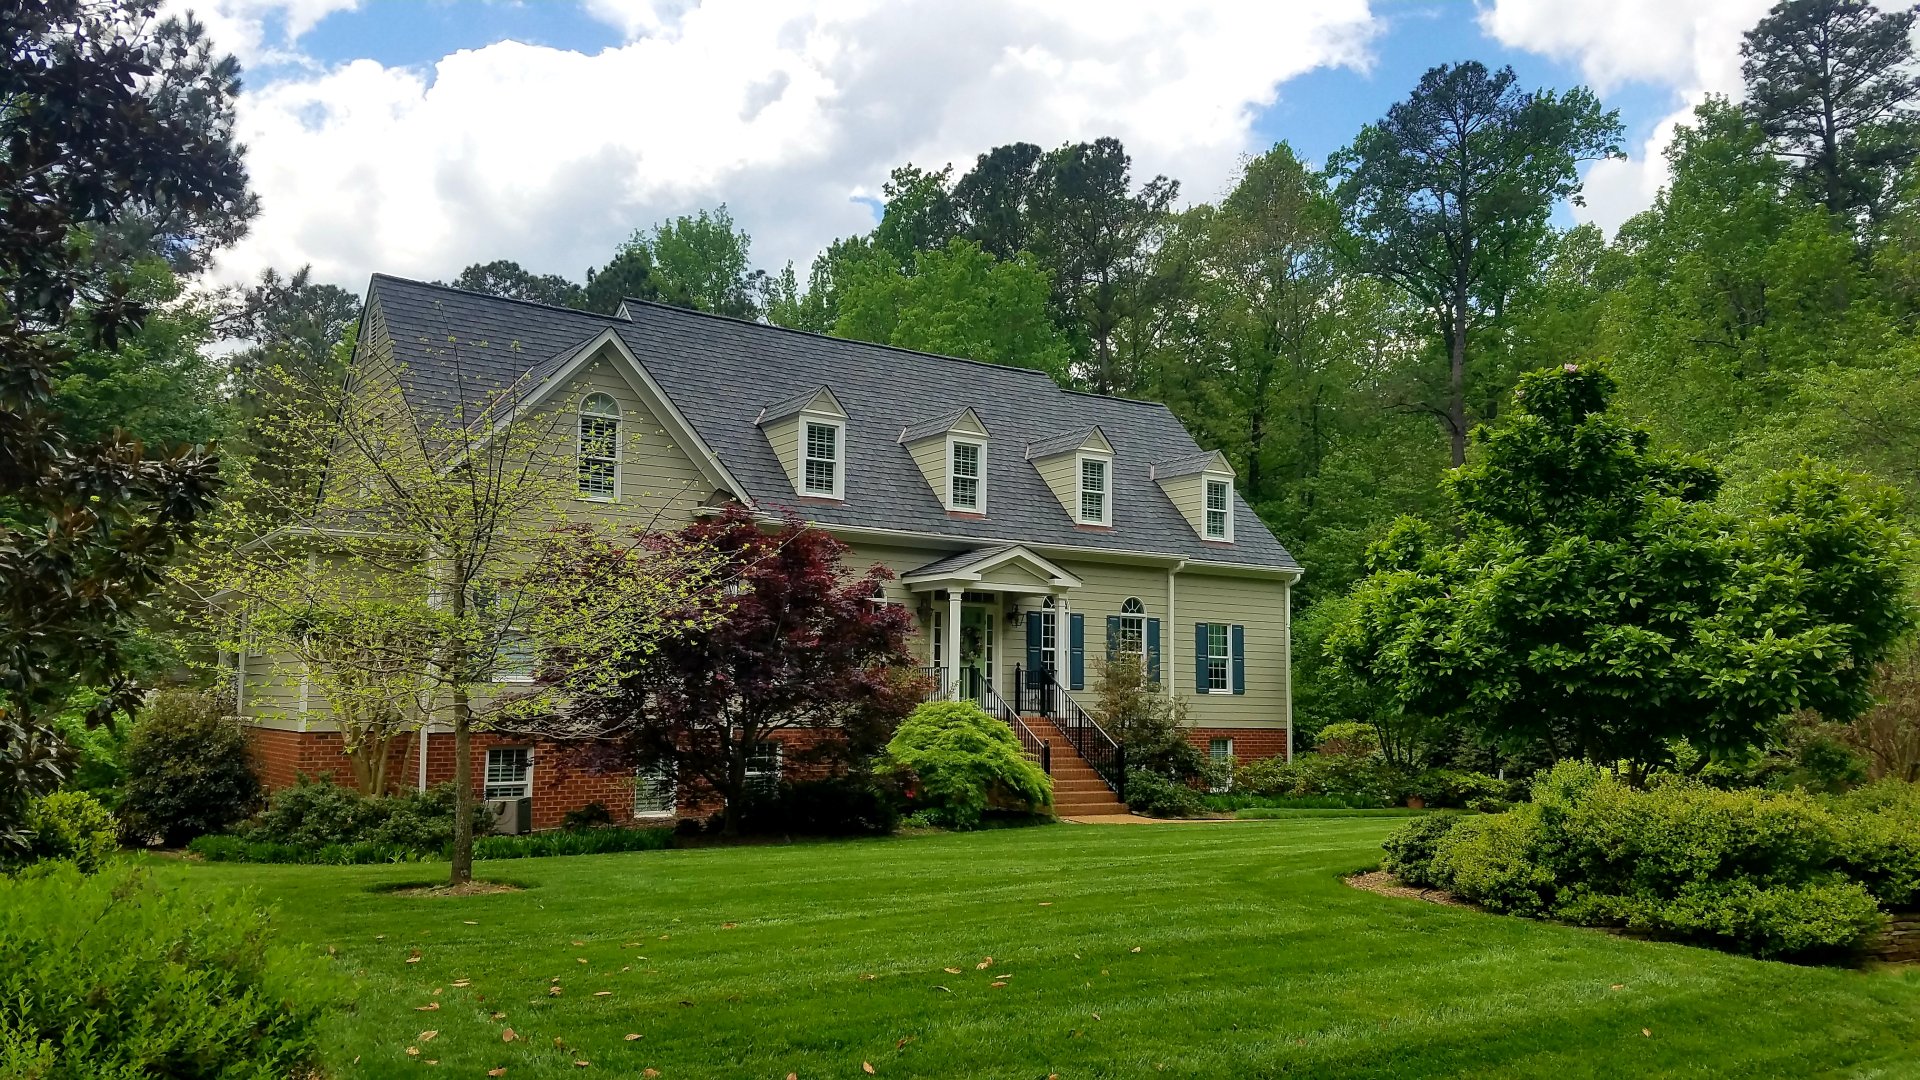  : Spring : Richmond VA Landscape Designer: Gardens by Monit, LLC: Monit Rosendale landscape designer Richmond and Charlottesville Virginia and Fredericksburg Virginia and Williamsburg Virginia